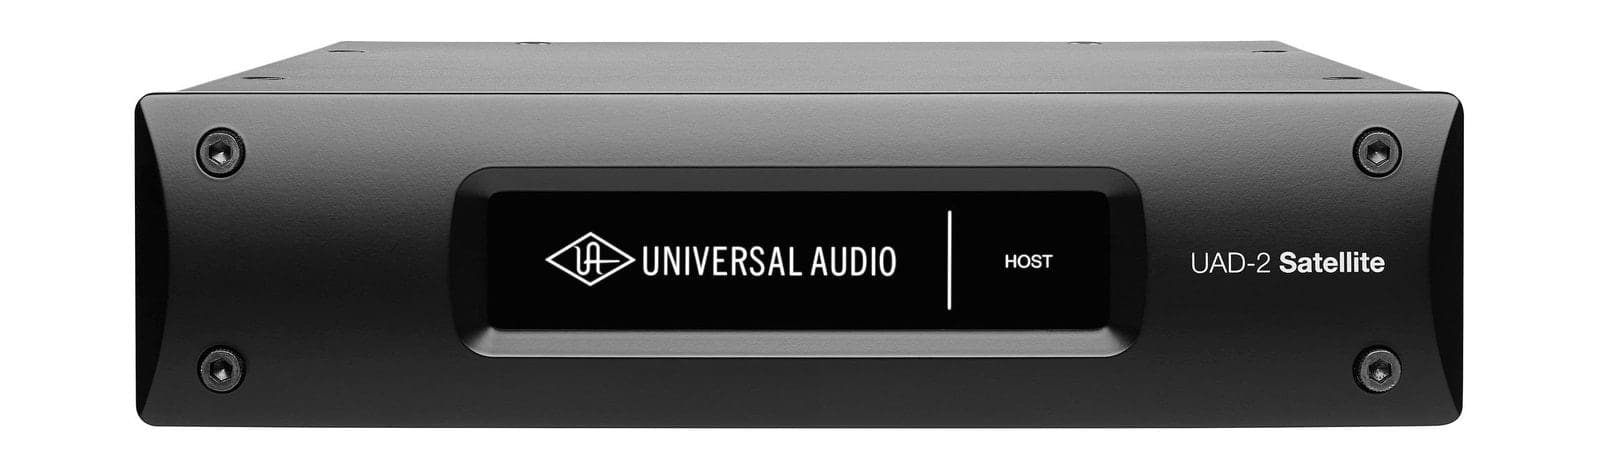 UNIVERSAL AUDIO UAD 2 Octo core SAT USB